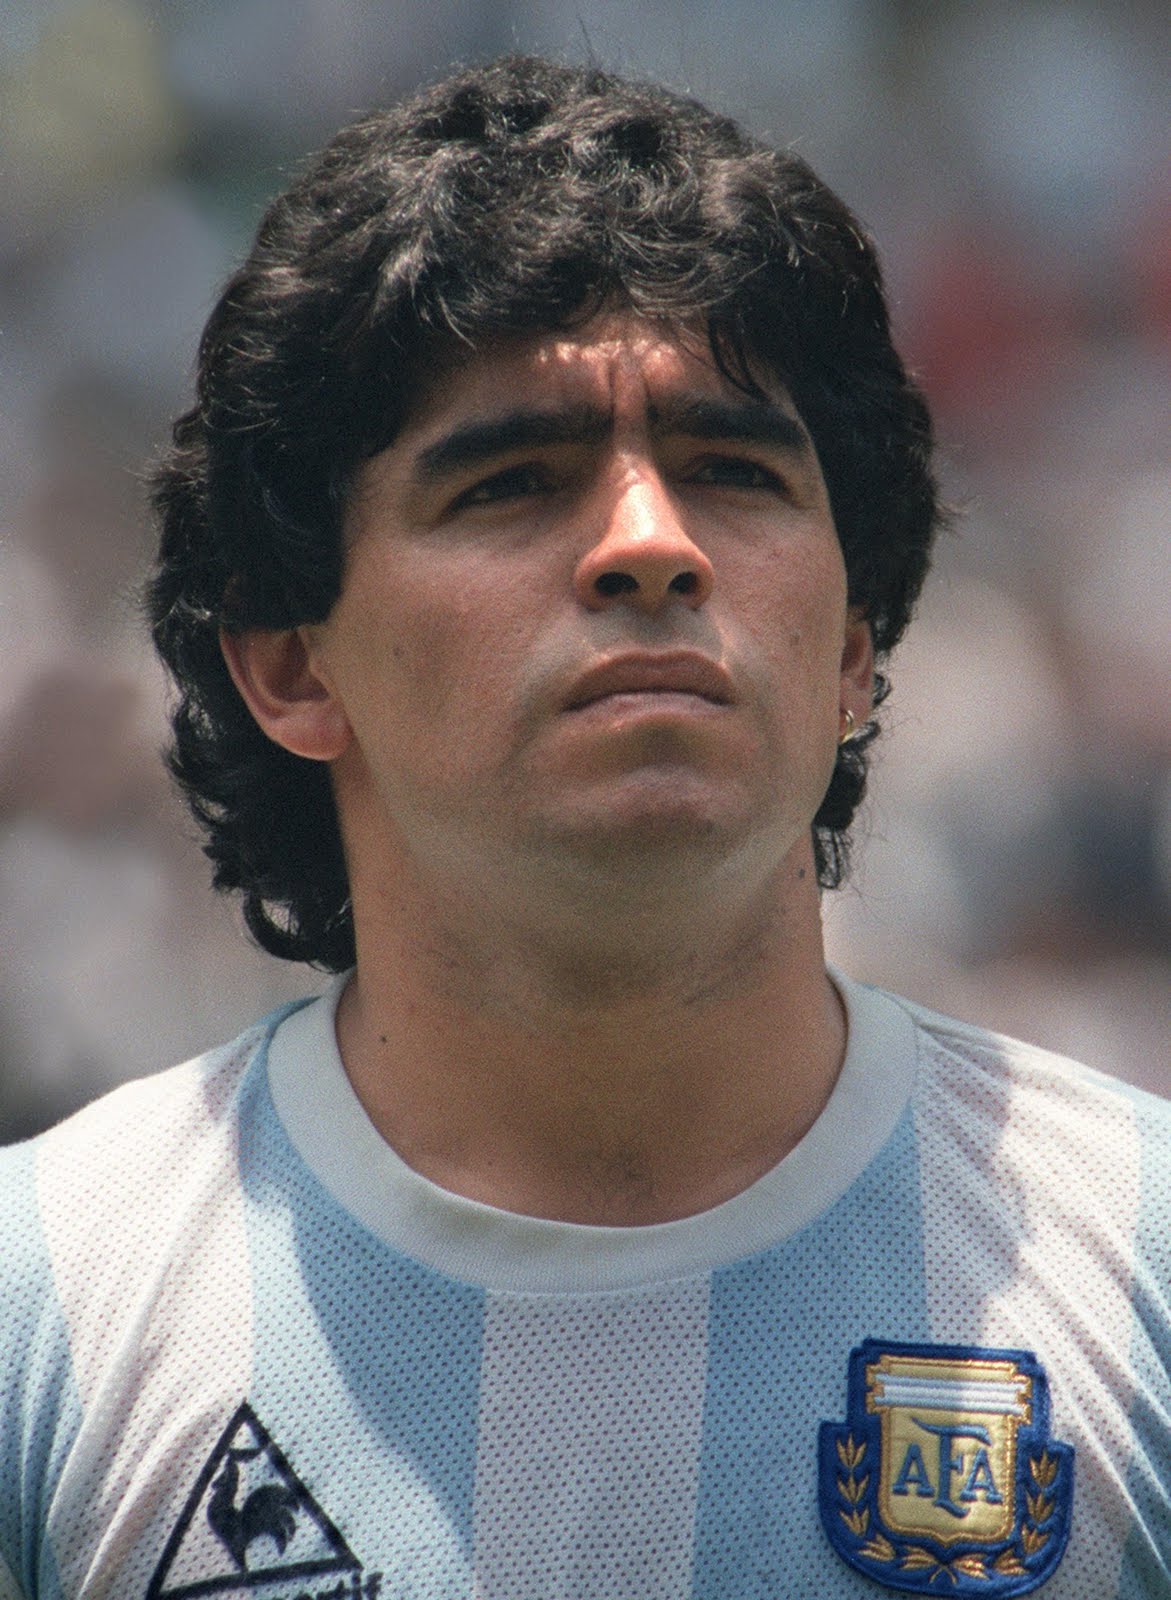 How tall is Diego Maradona?